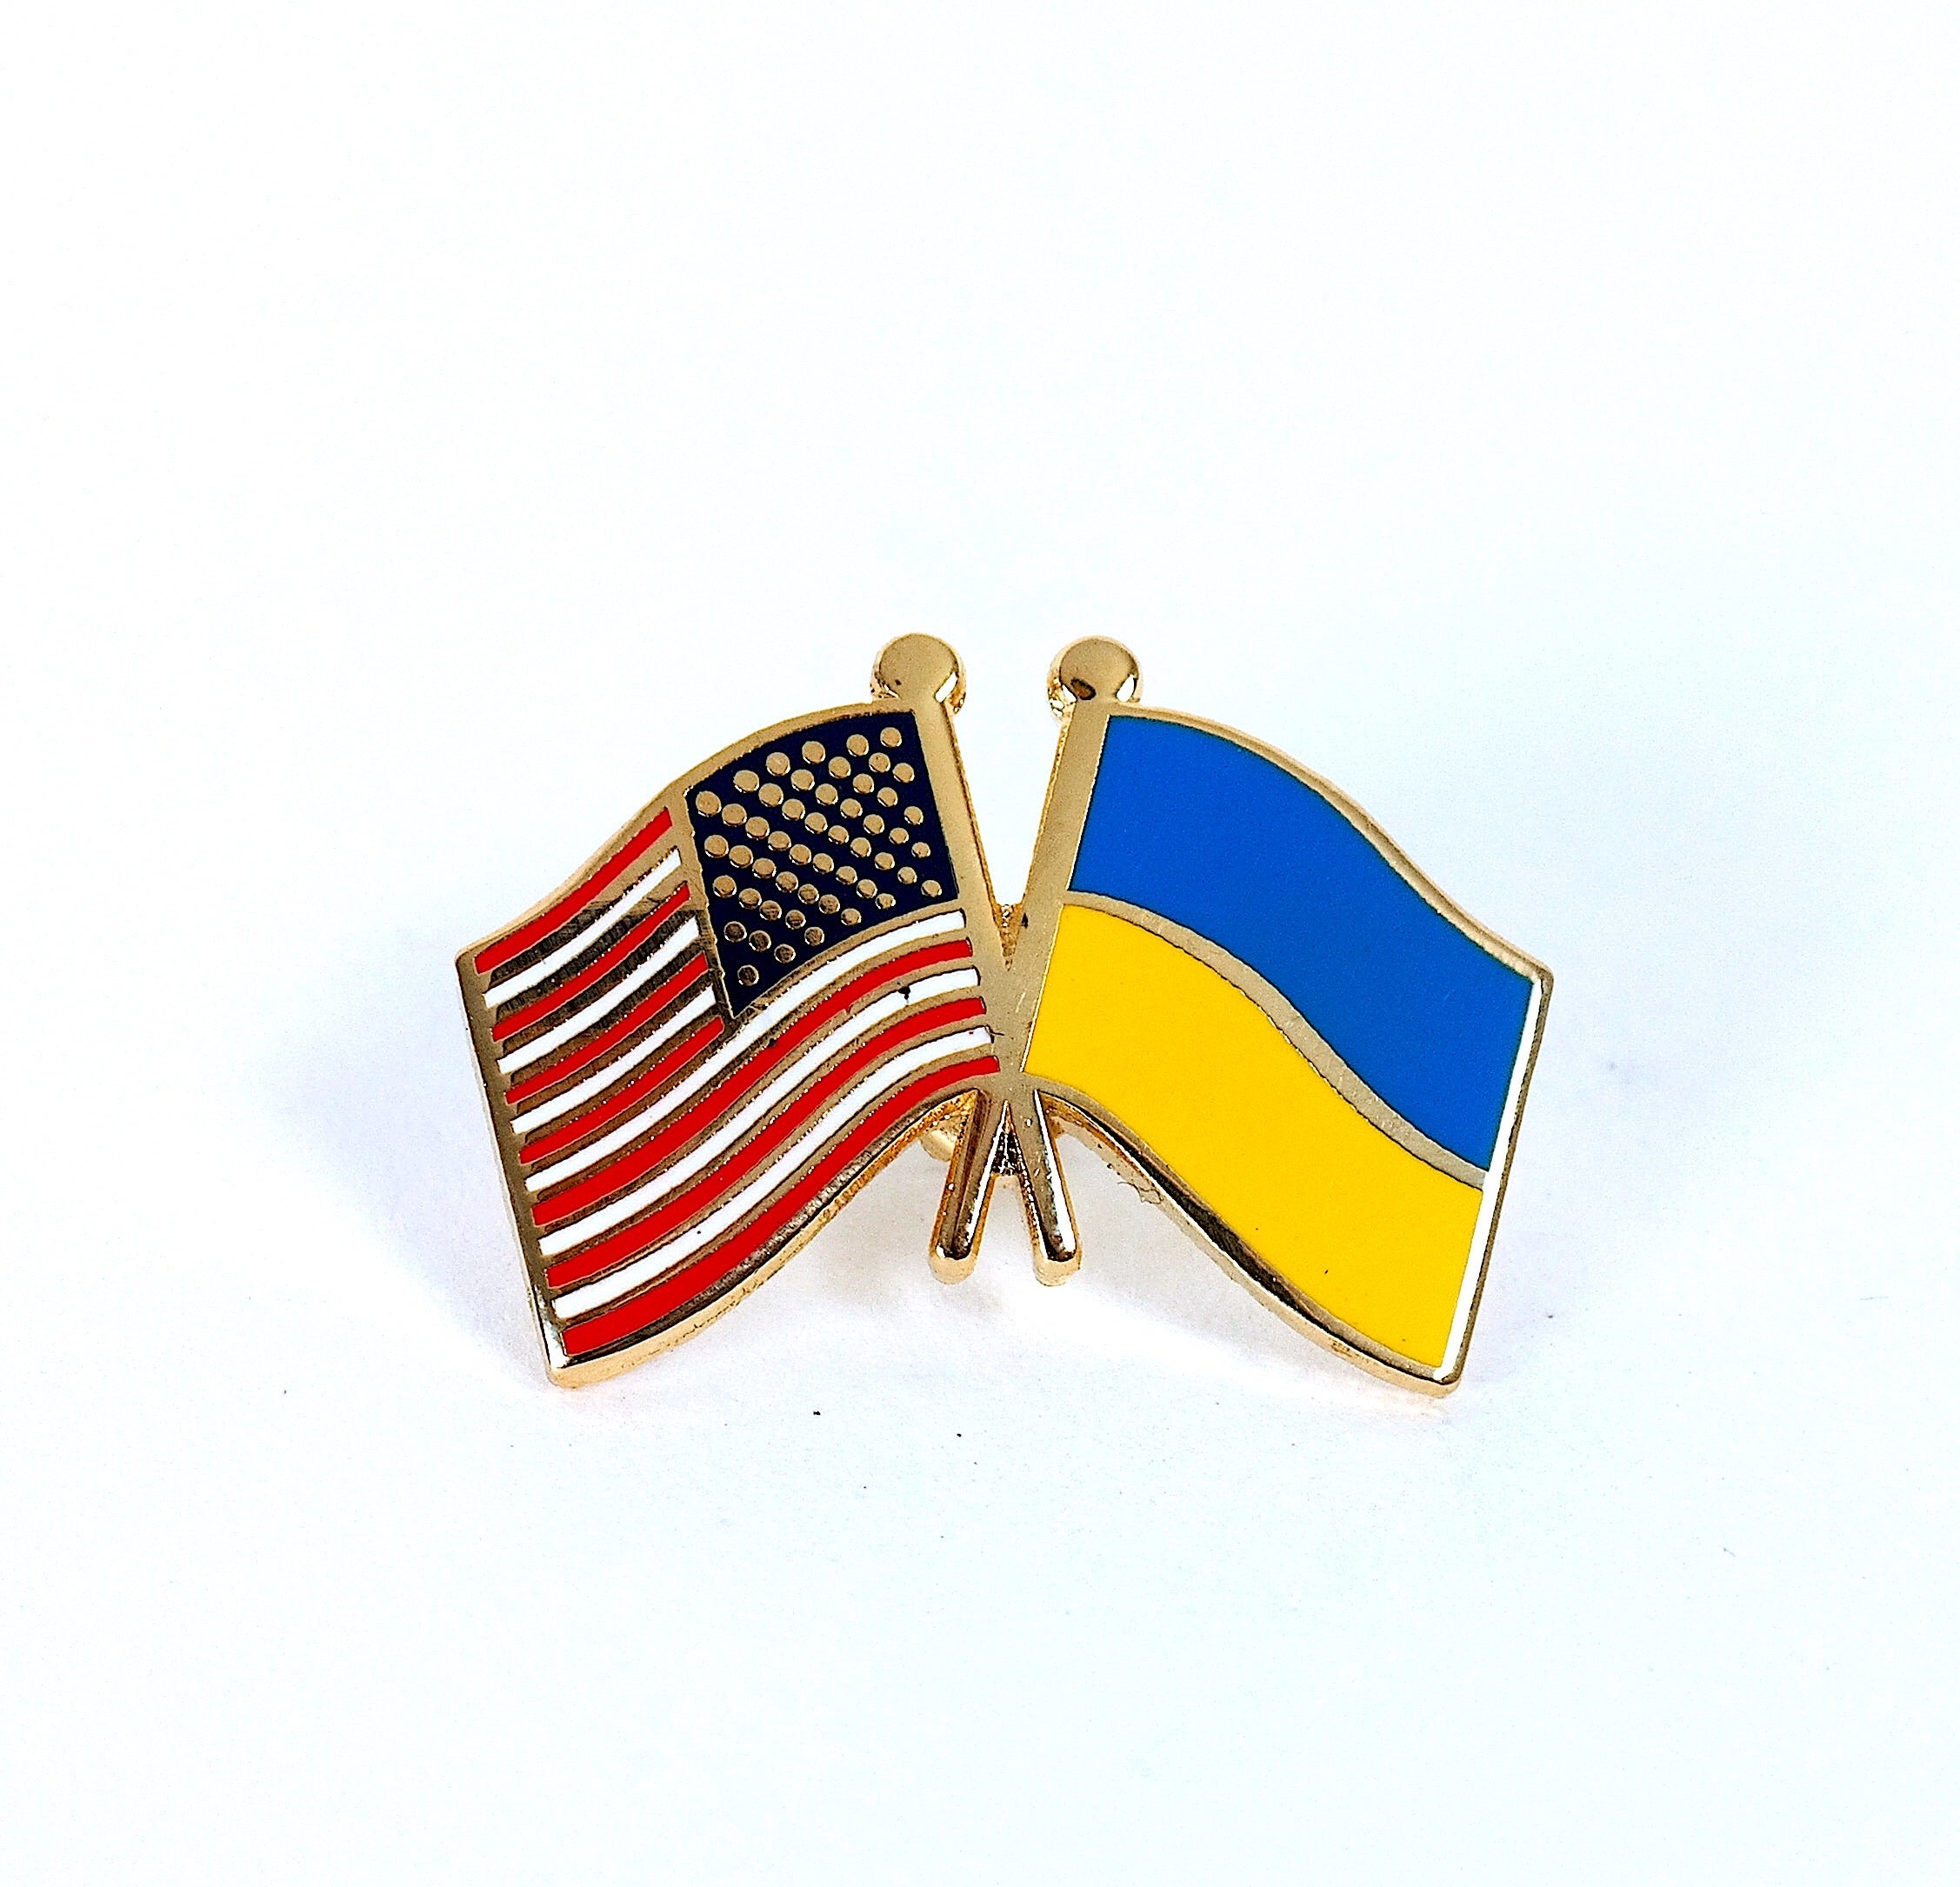 Ukraine & USA Friendship Flags Lapel Pin